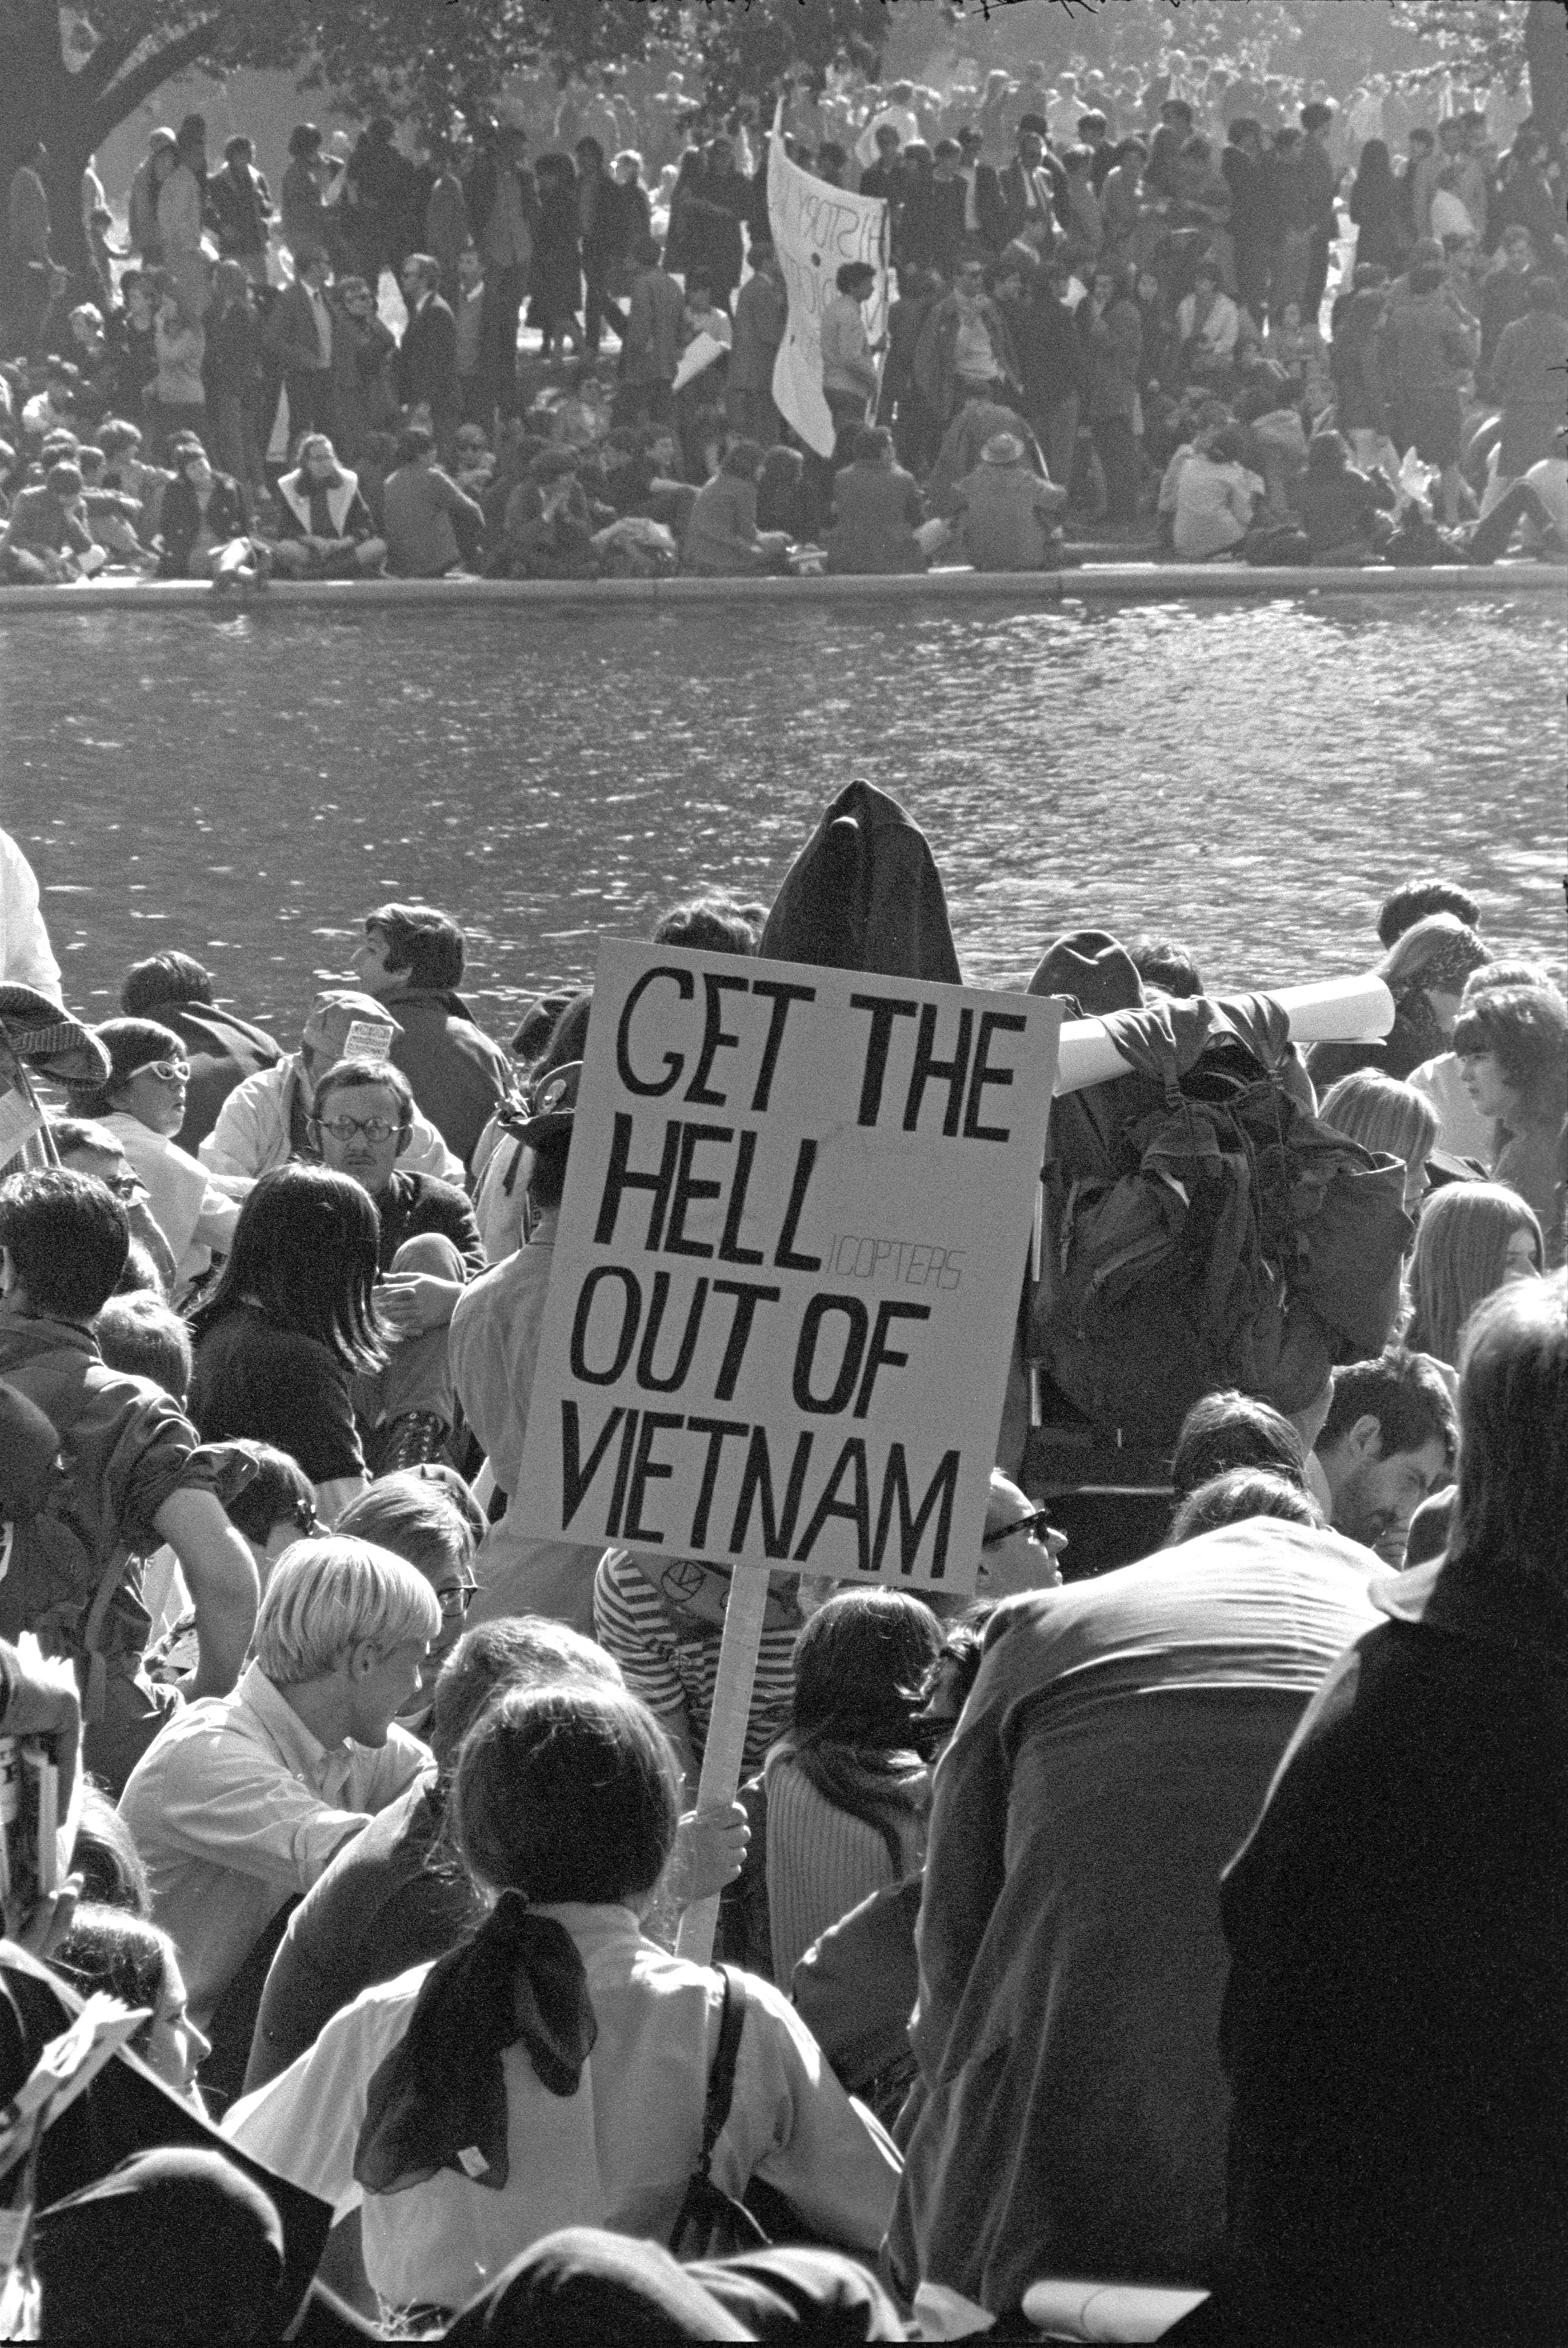 Vietnam War Protest in Washington, D.C. by Frank Wolfe, October 21, 1967.